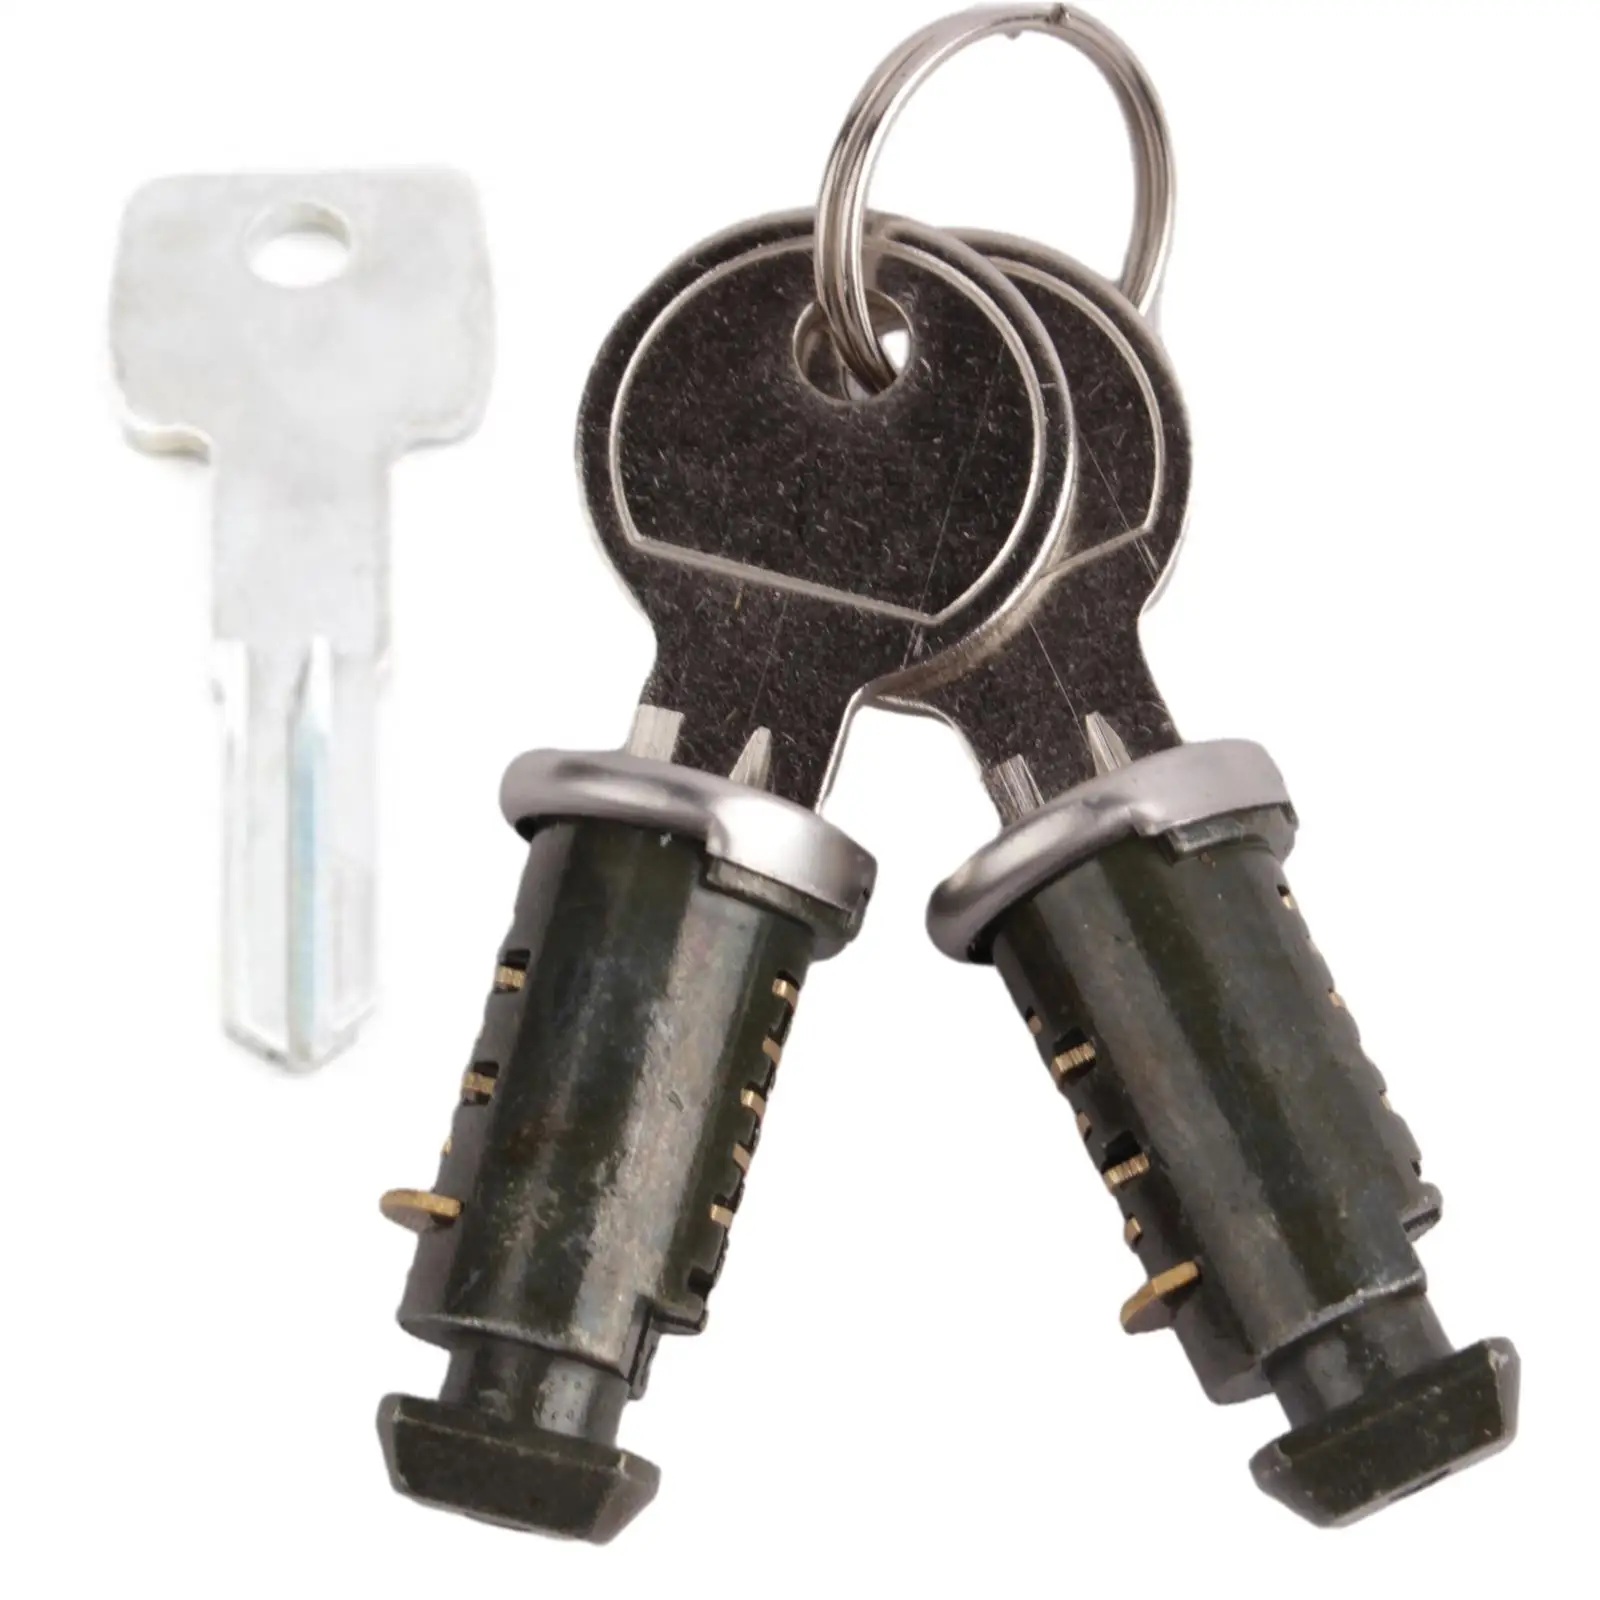 Lock Cylinders for Car Racks System Locks Keys Lock Cores Roof Rack Cross Bars Locks Key Kit for SUV Car Rack Locks durable